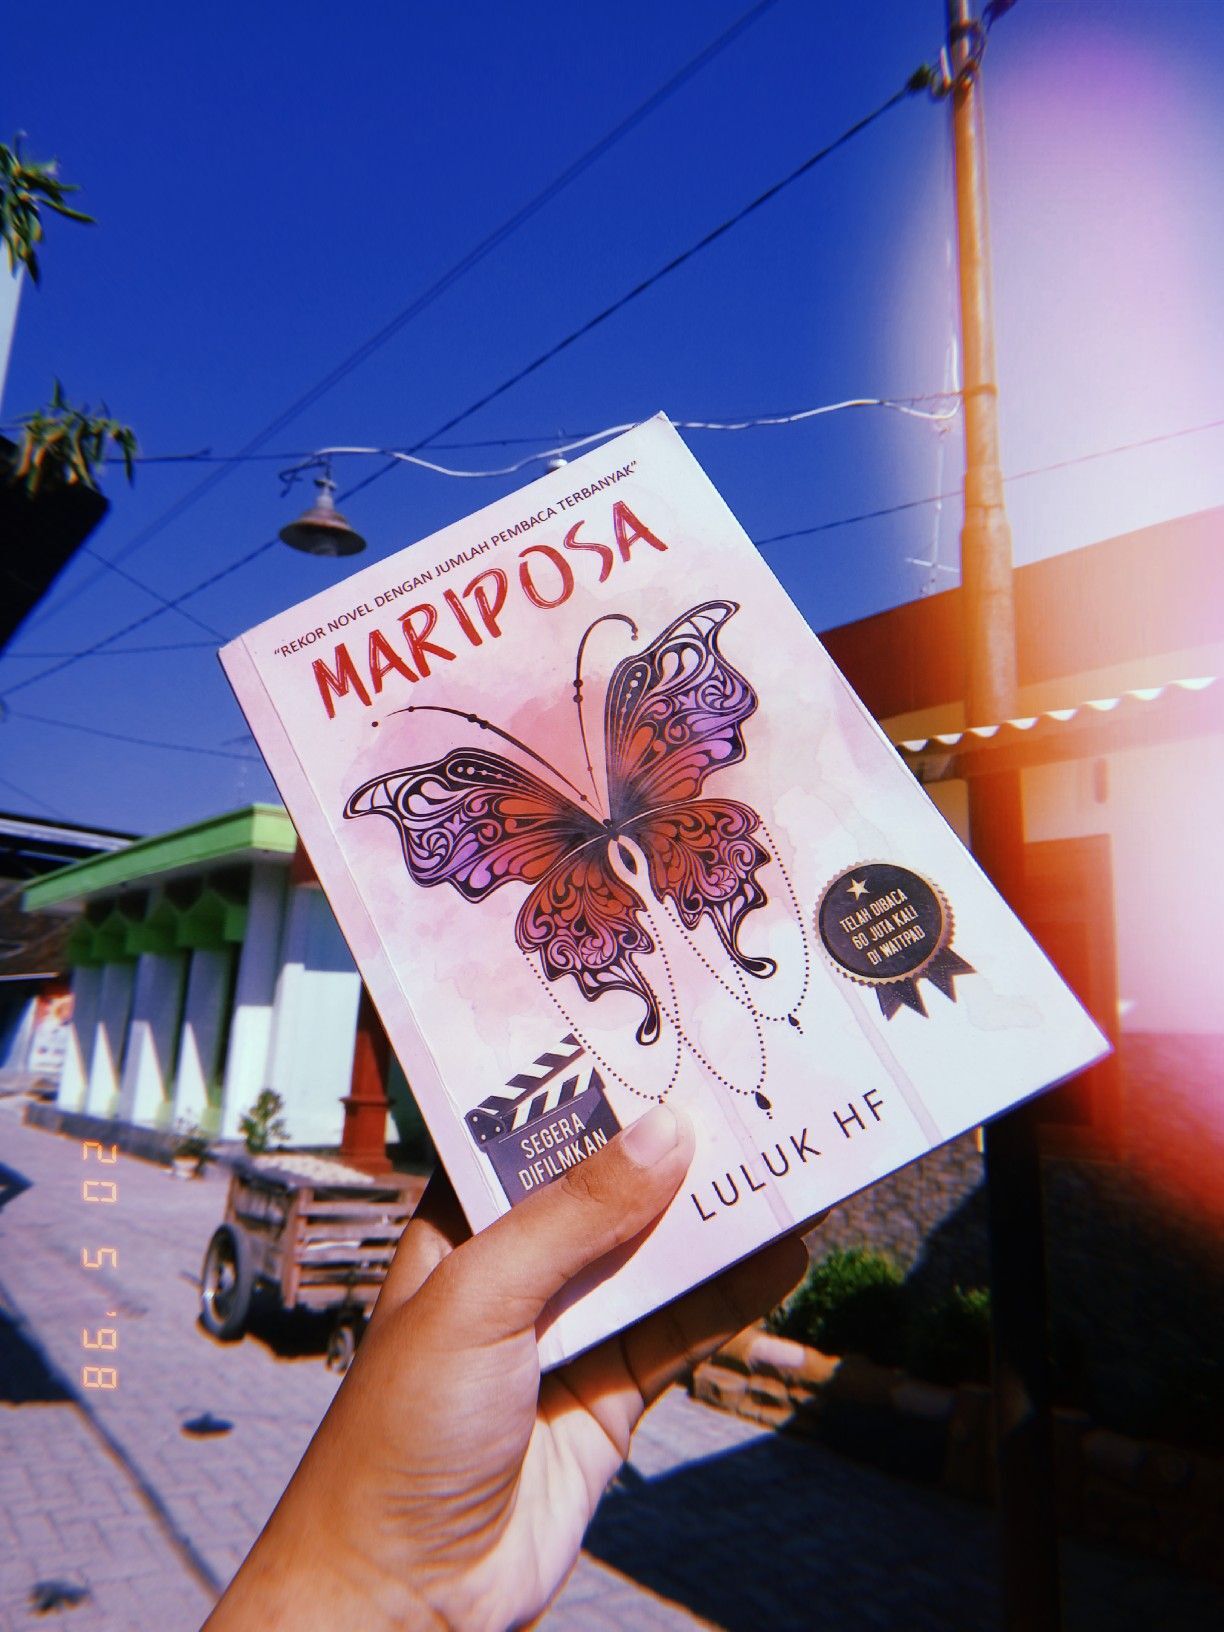 Review Mariposa 